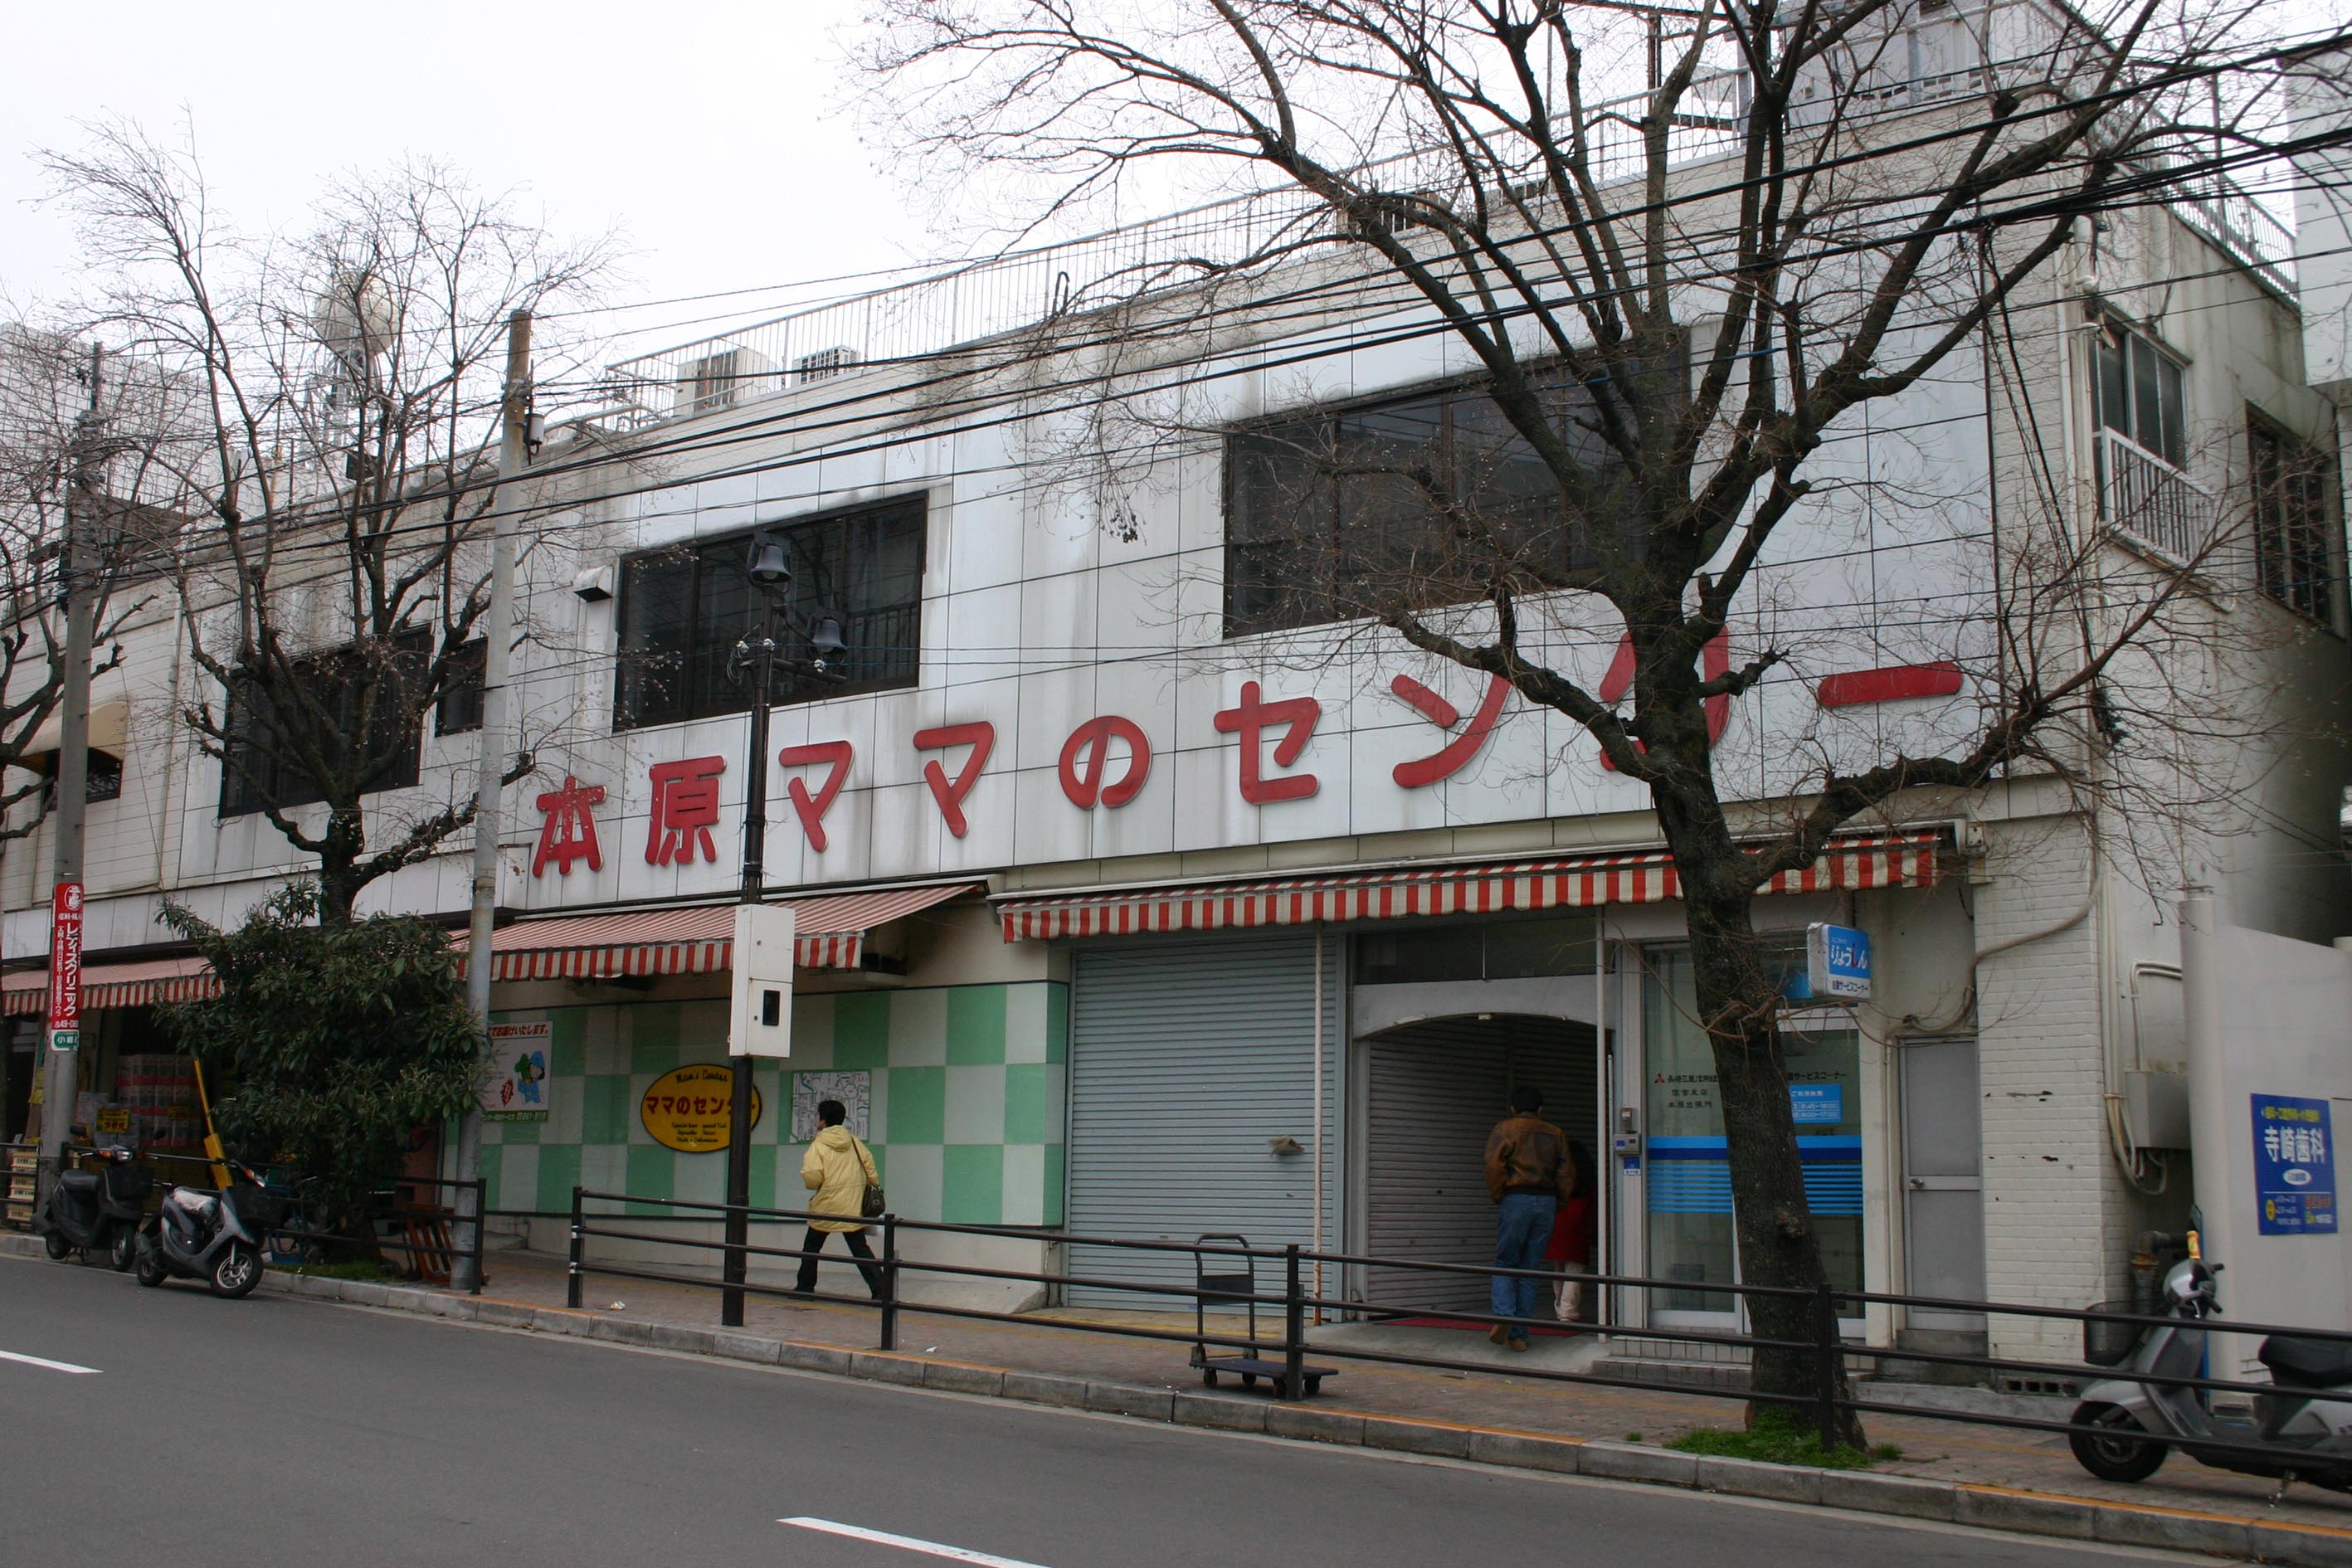 Supermarket. 428m until the mom of center Motohara store (Super)